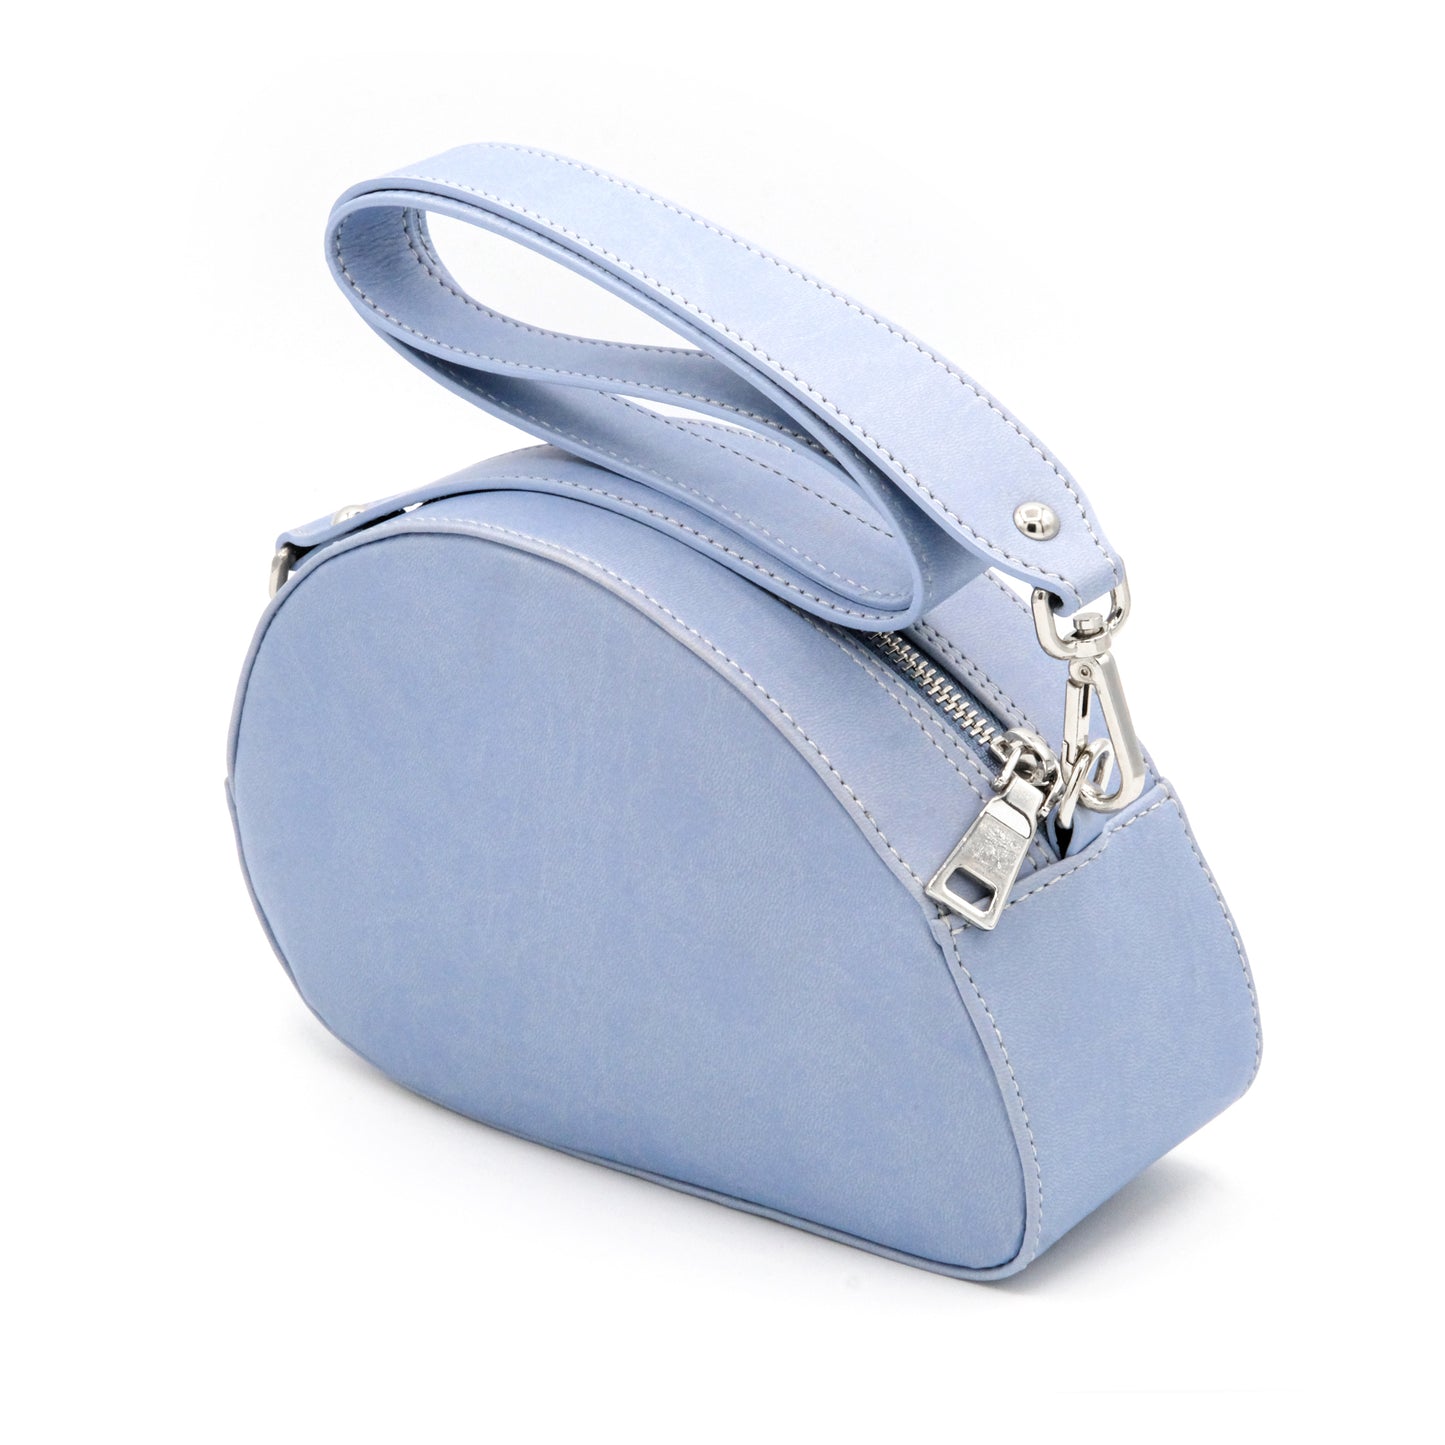 AMA Small bag light blue